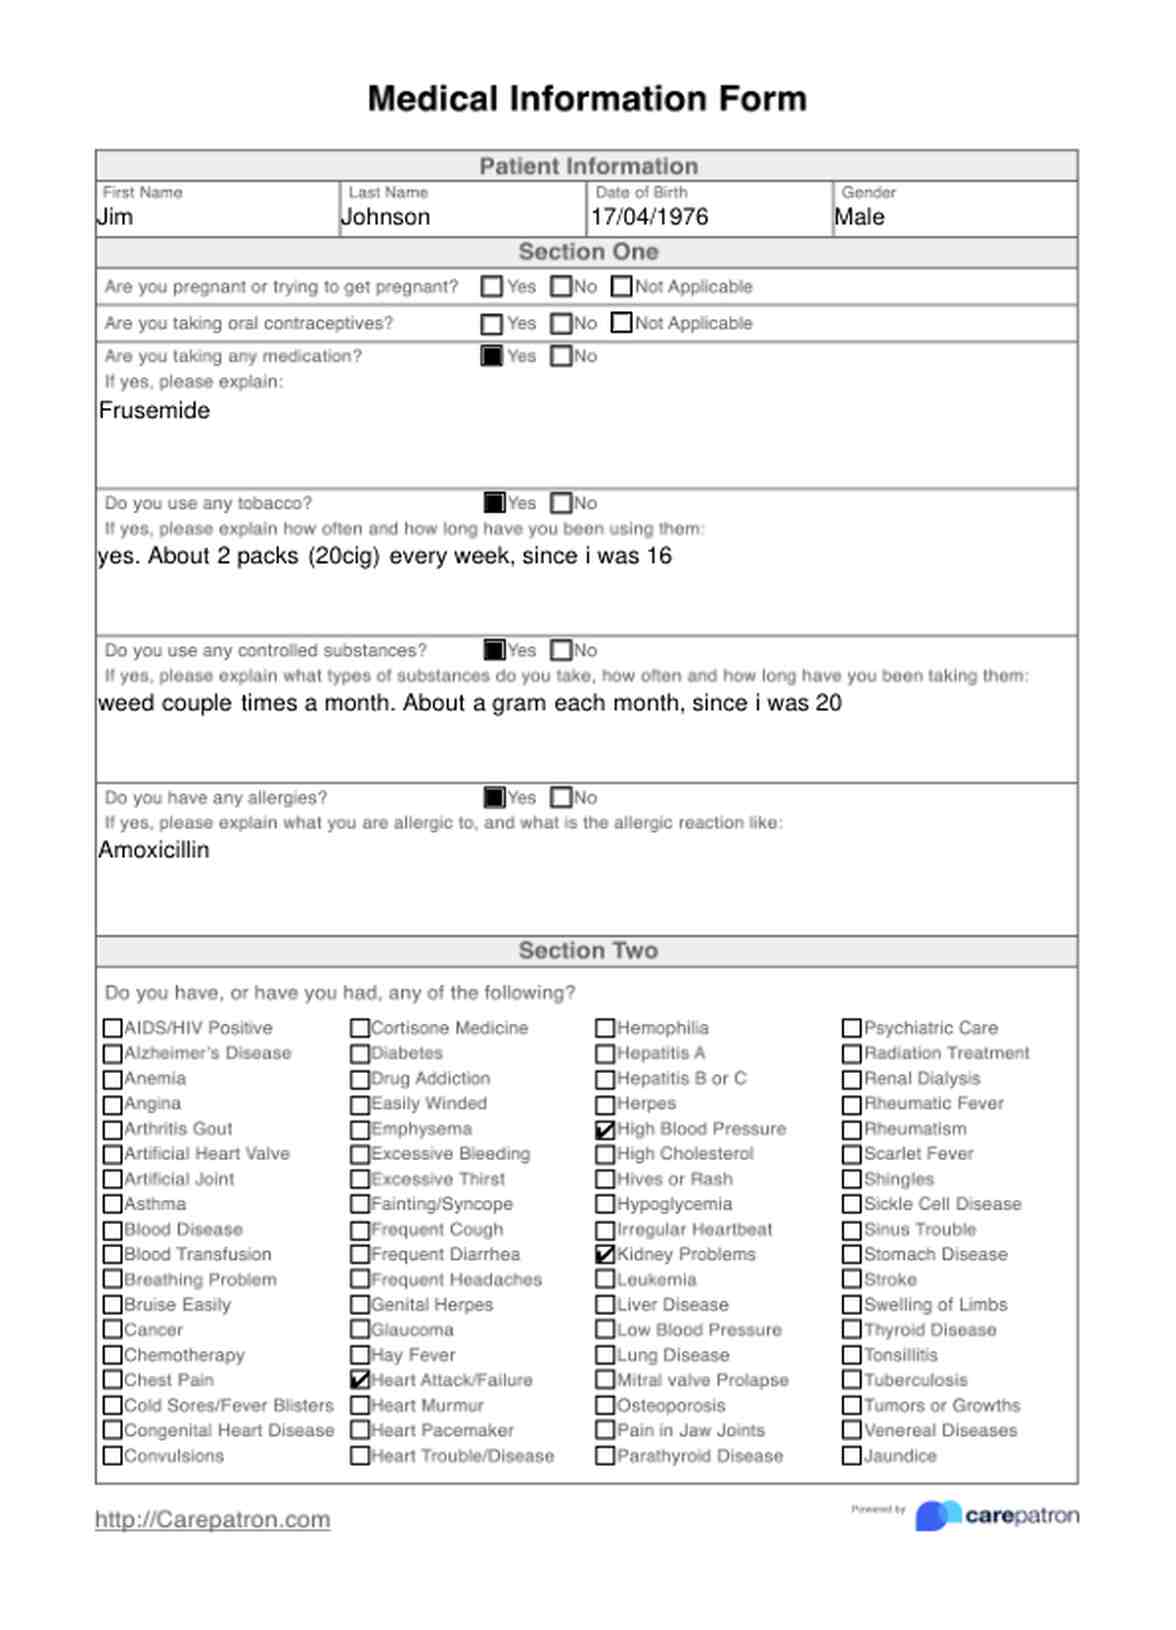 Medical Information Form PDF Example